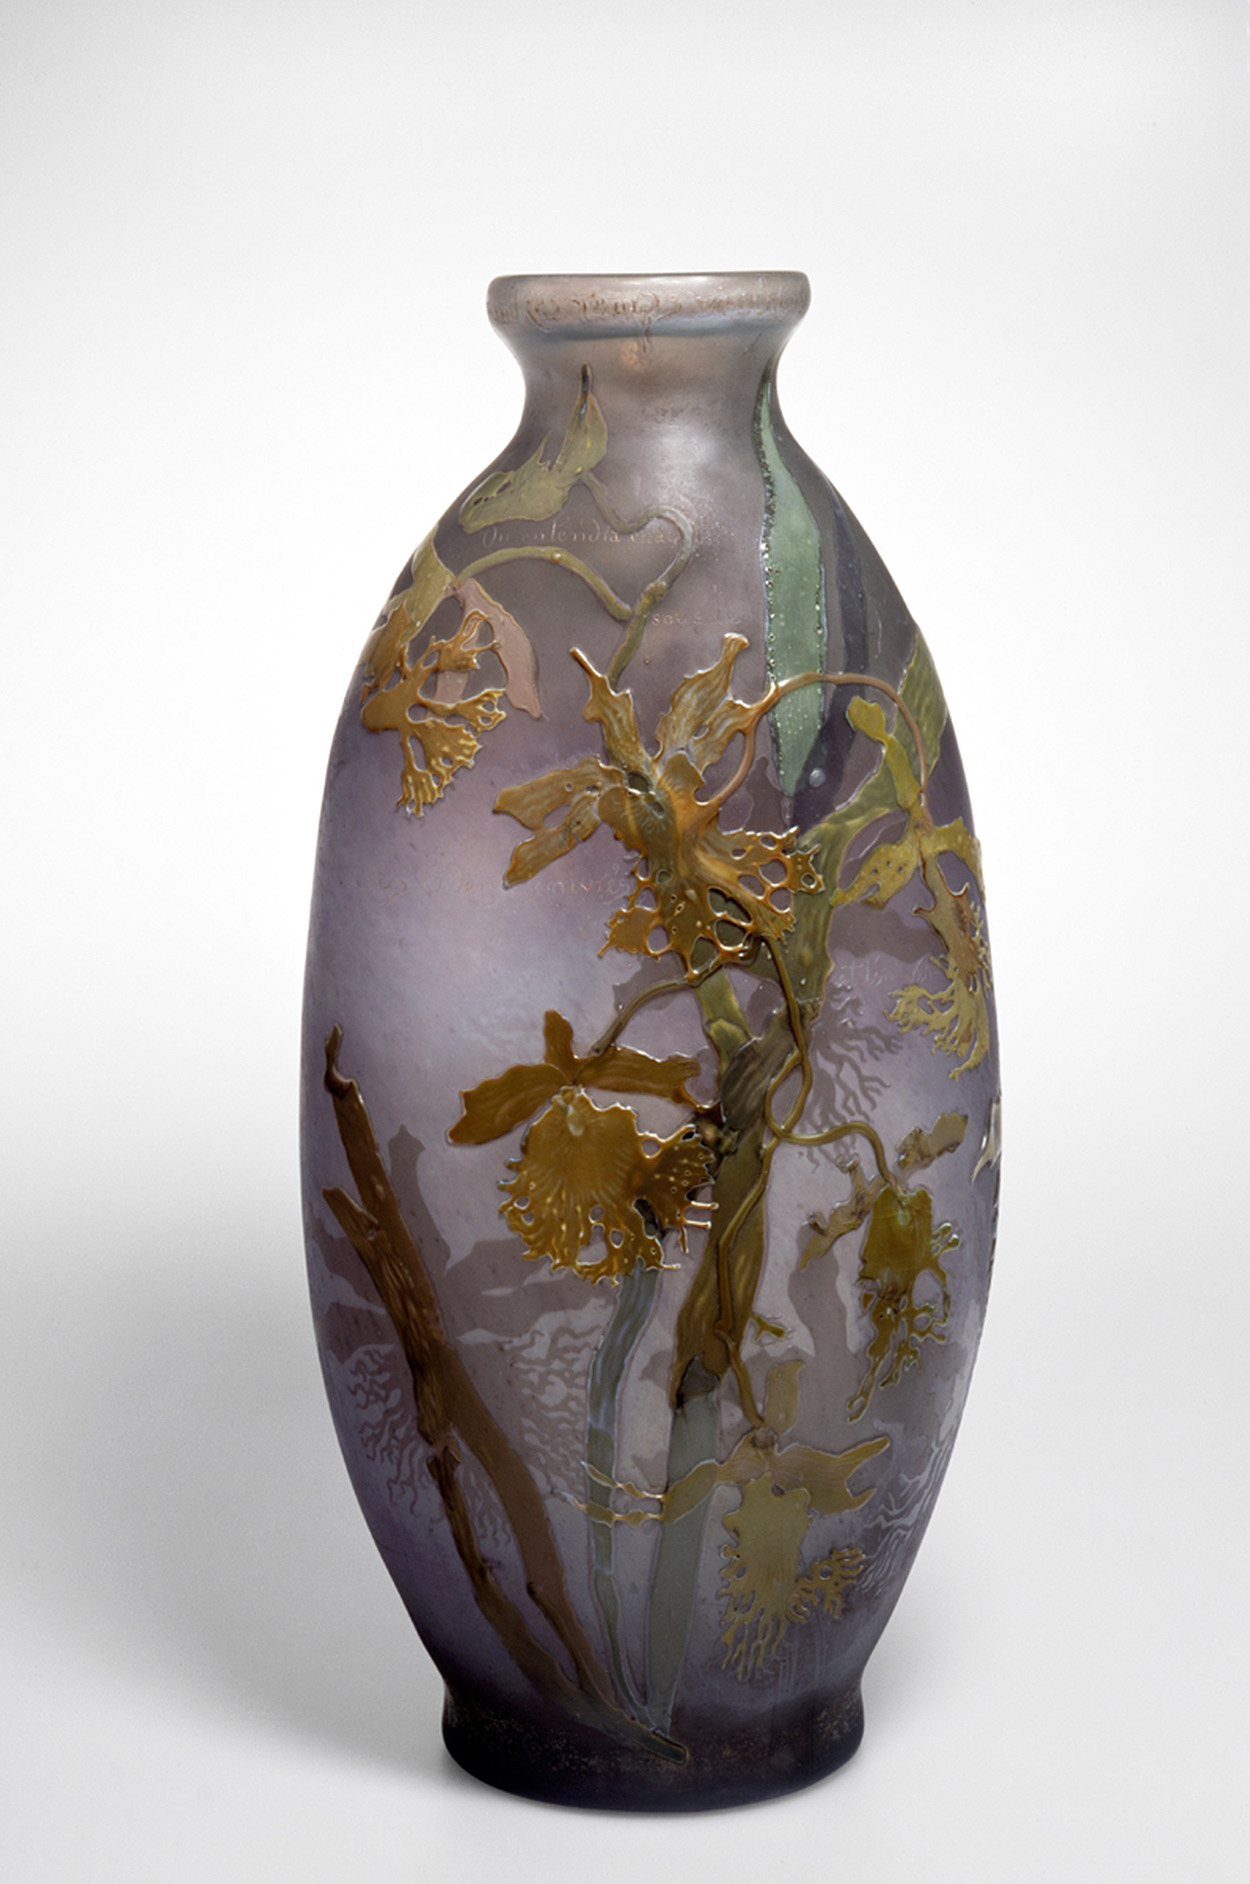 Váza by Emil Gallé - 1899 - 43,00 x 20,50 cm 